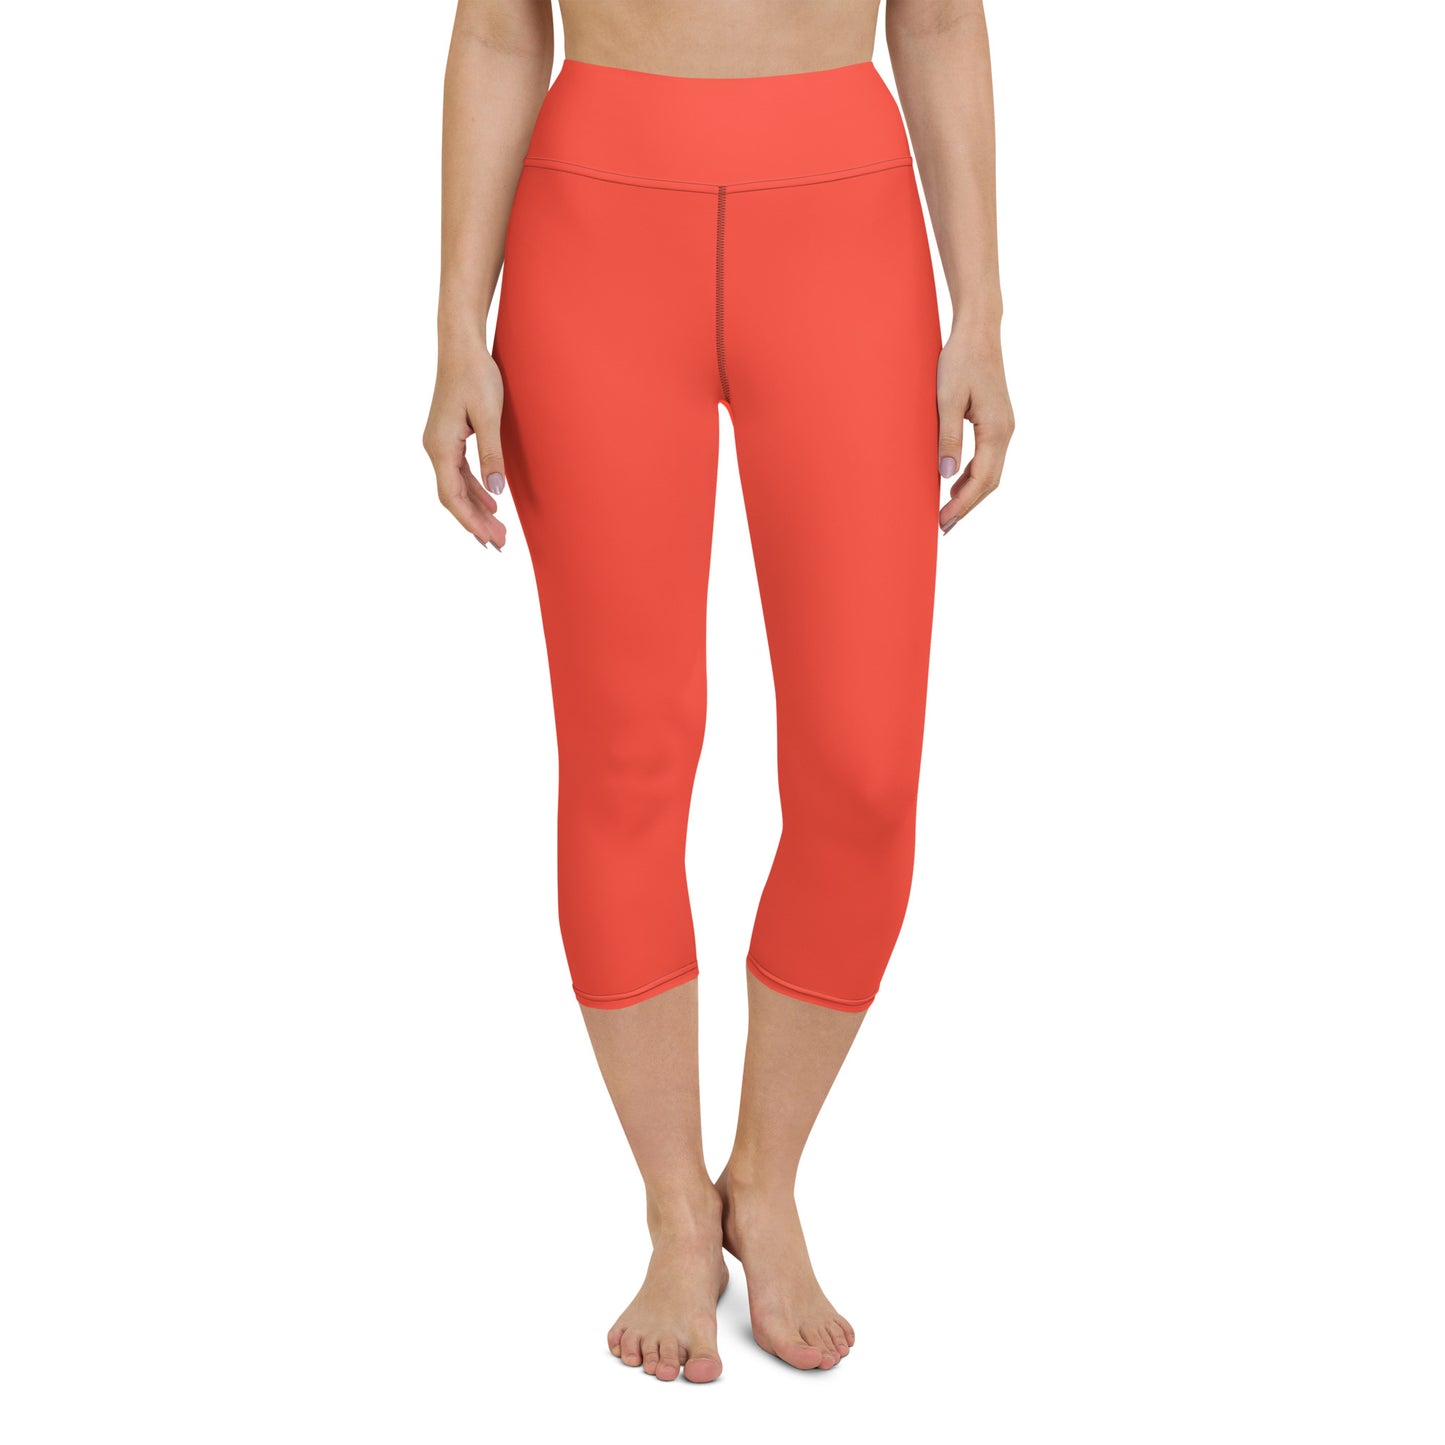 Surma Solid Red Capri High Waist Yoga Leggings / Pants with Inside Pocket